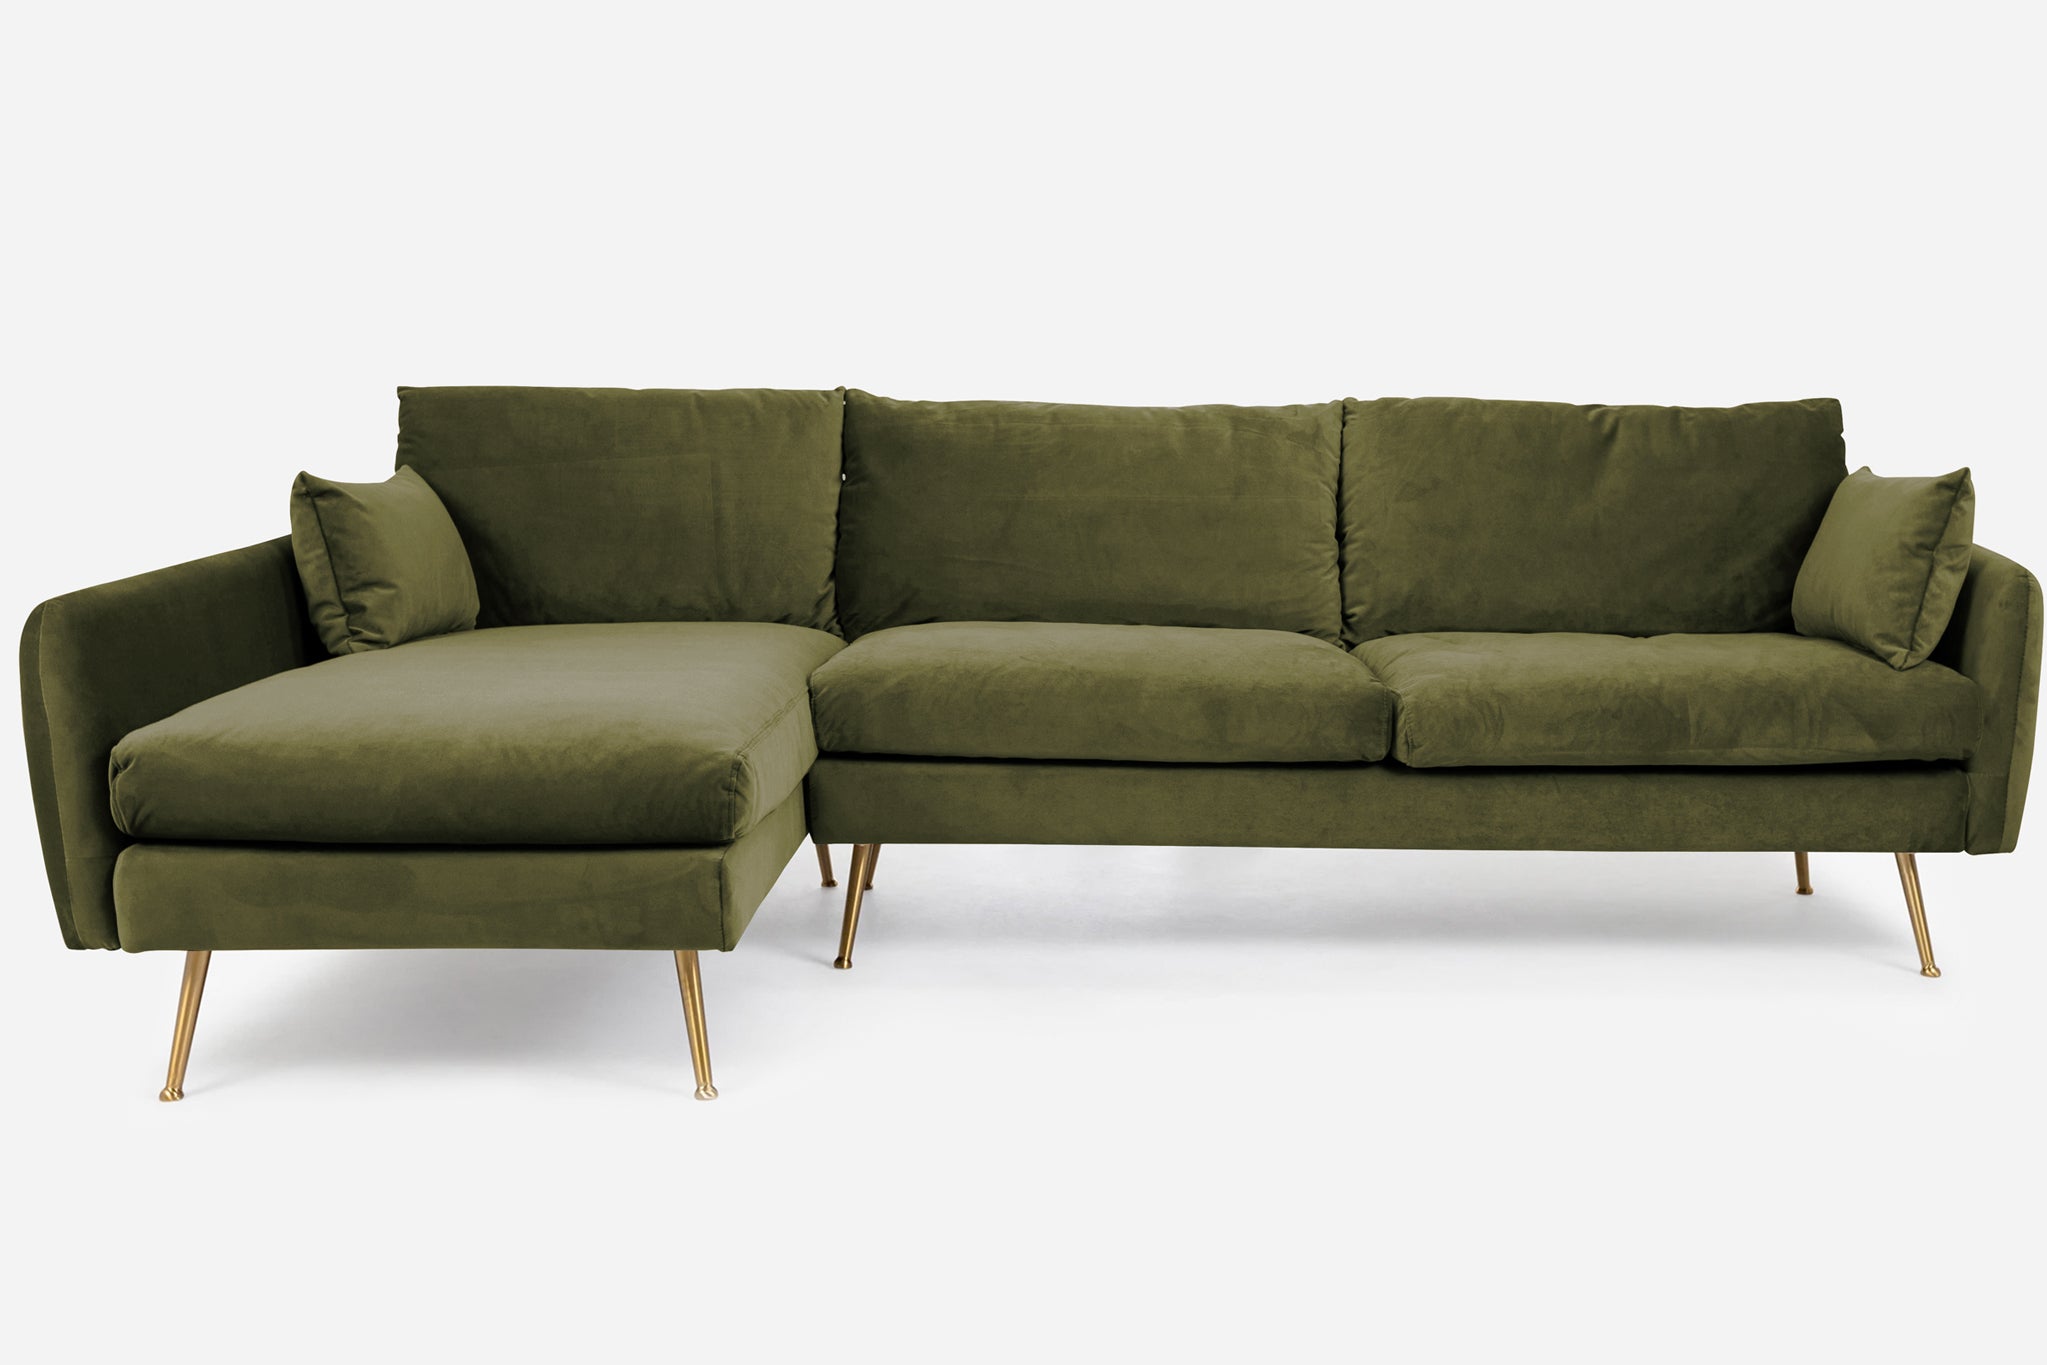 park sectional sofa shown in olive velvet with gold legs left facing